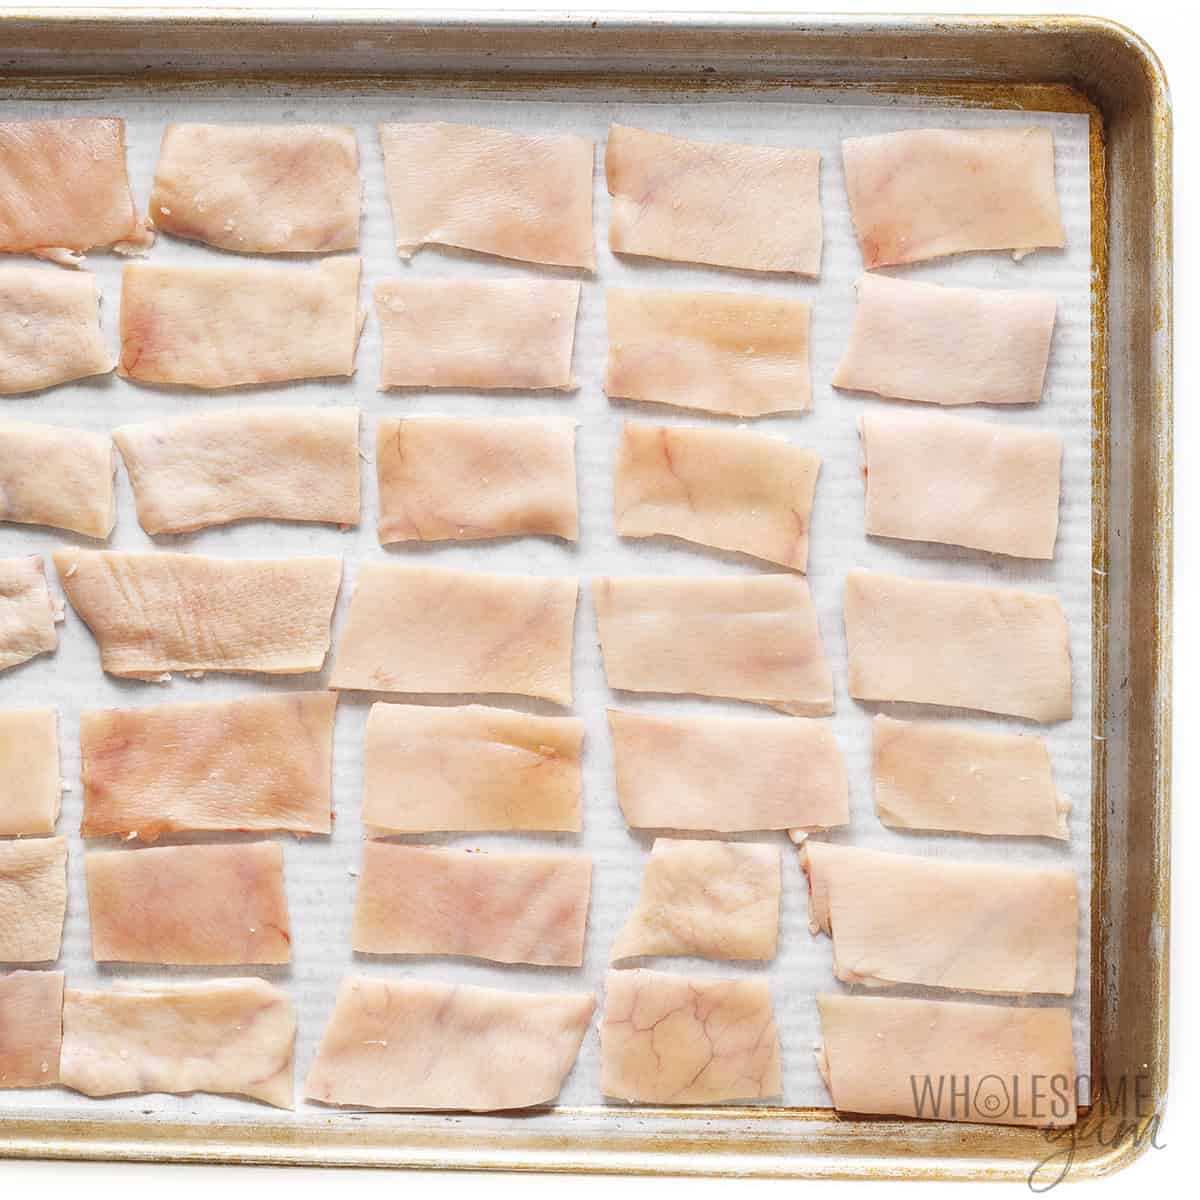 Unbaked pork rinds arranged on baking sheet.